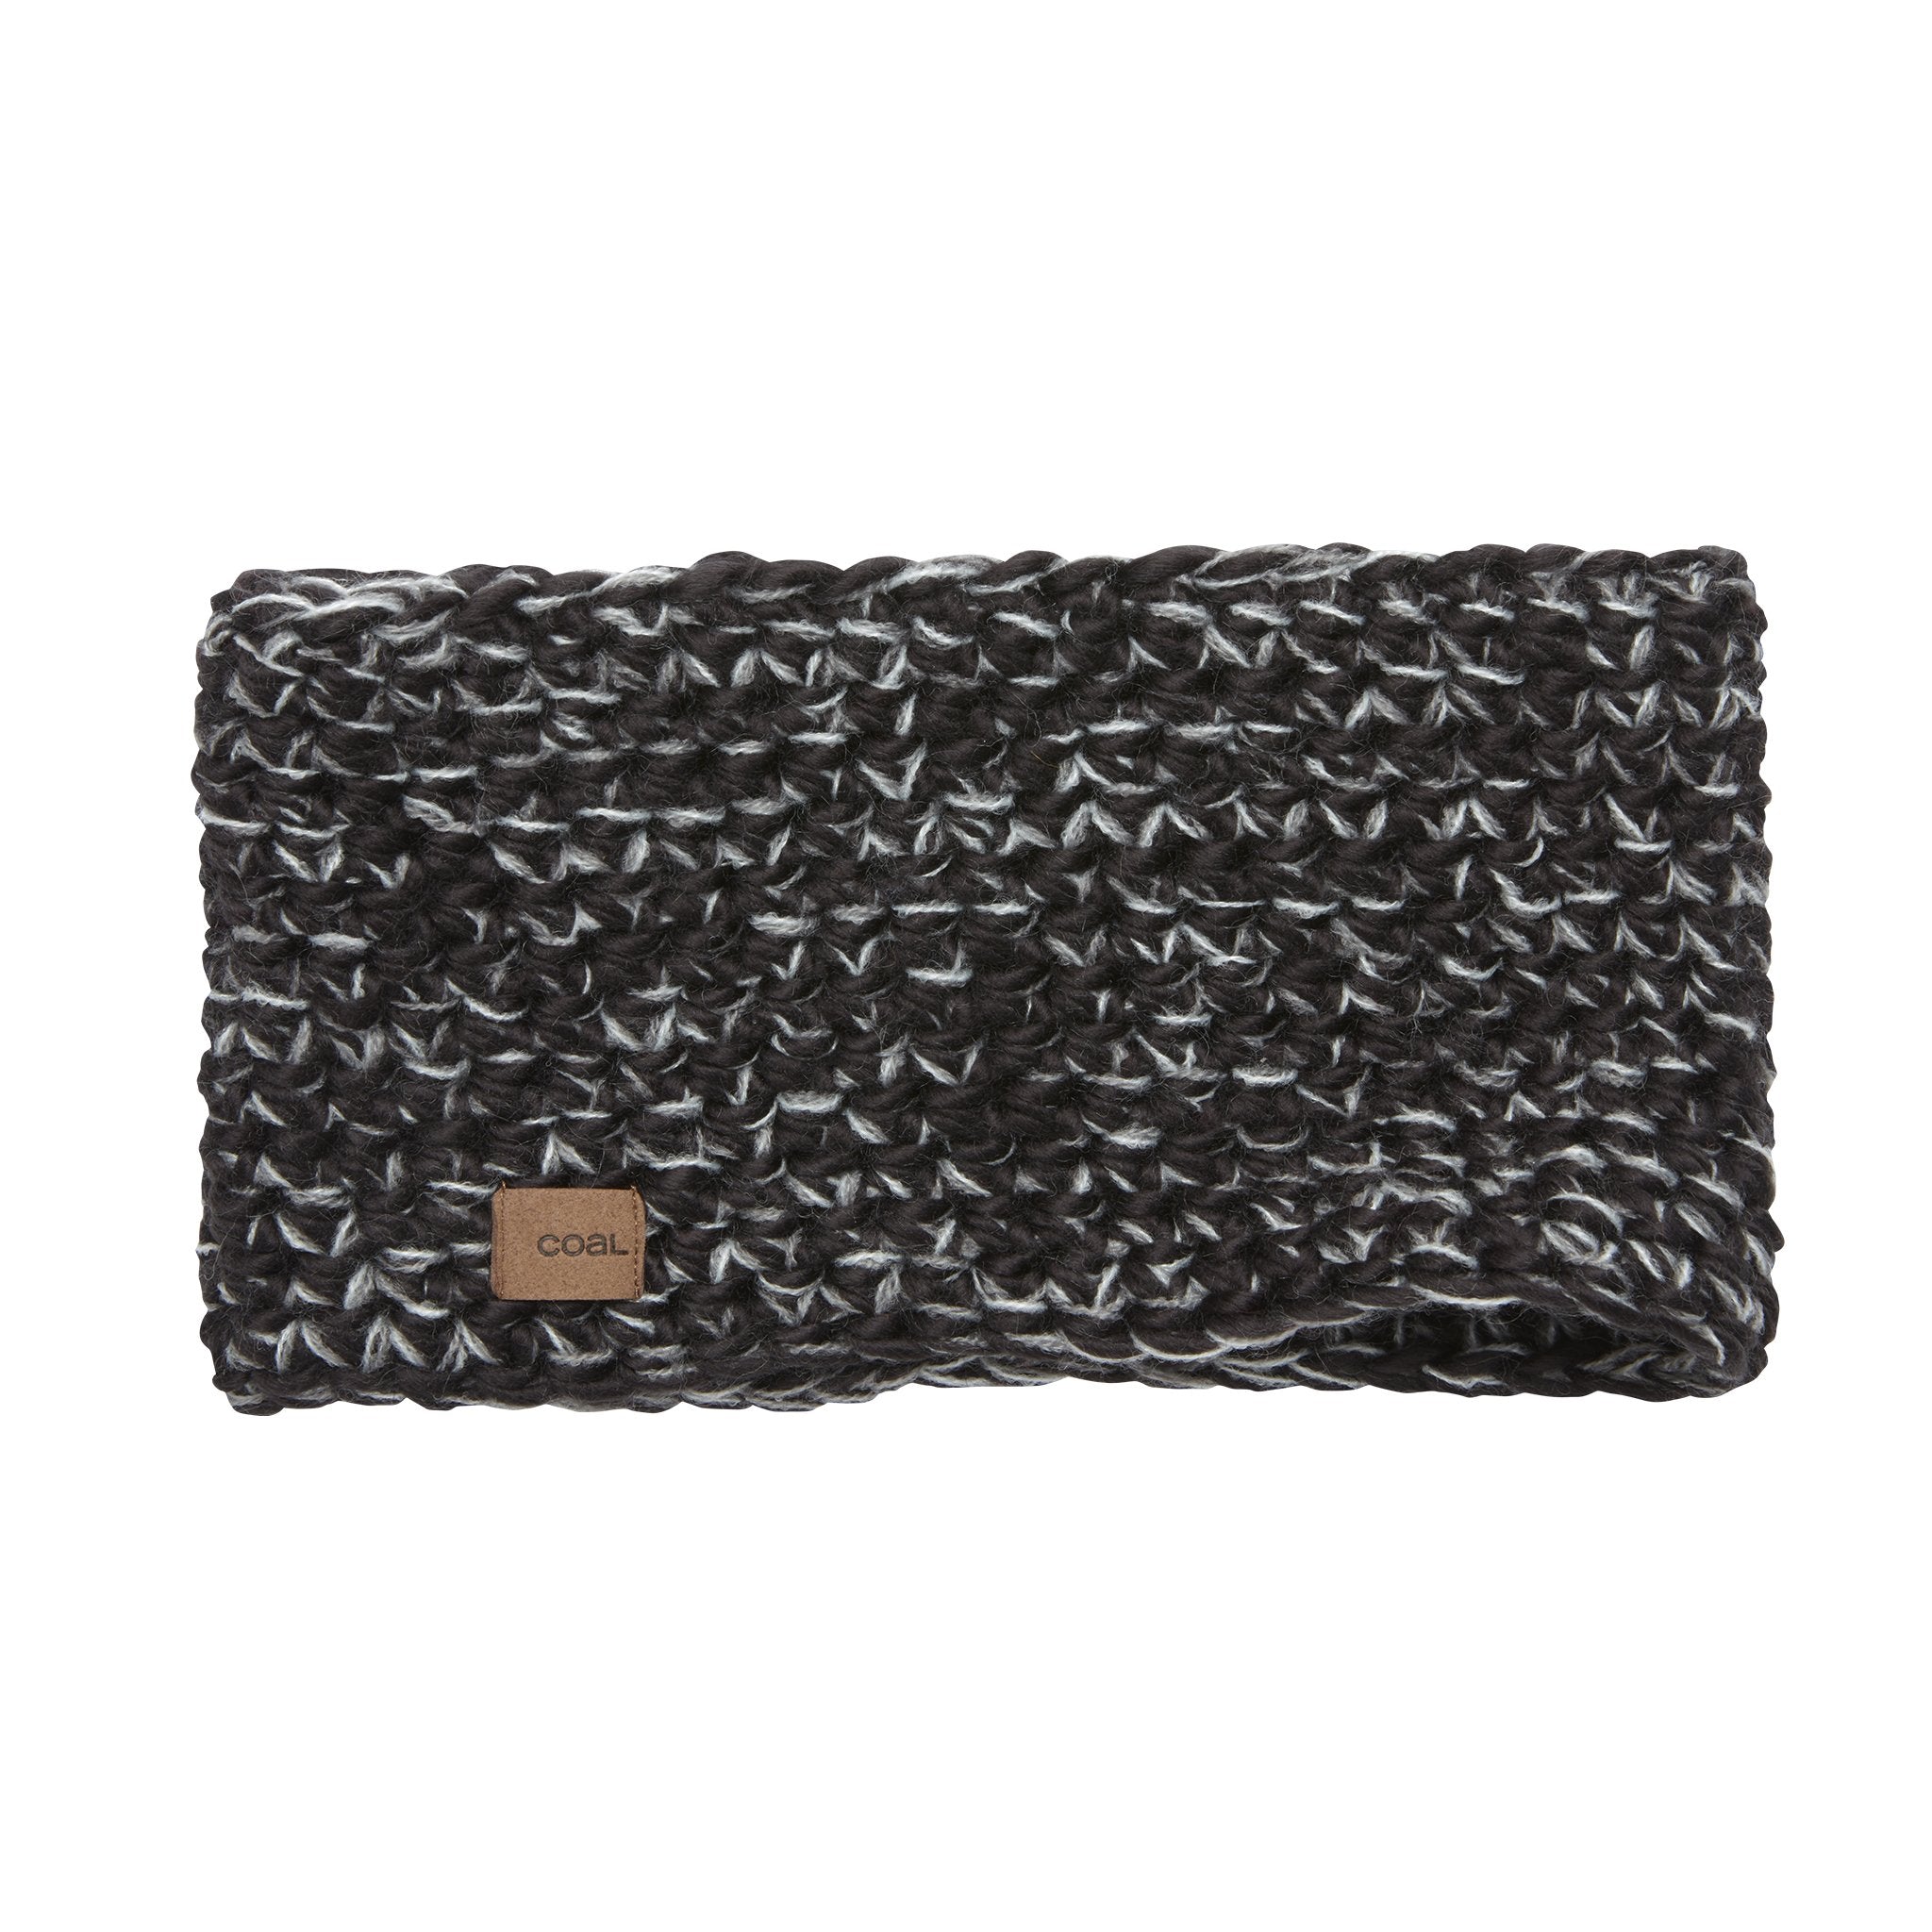 Coal Peters Crocheted Ear Warmer - Black